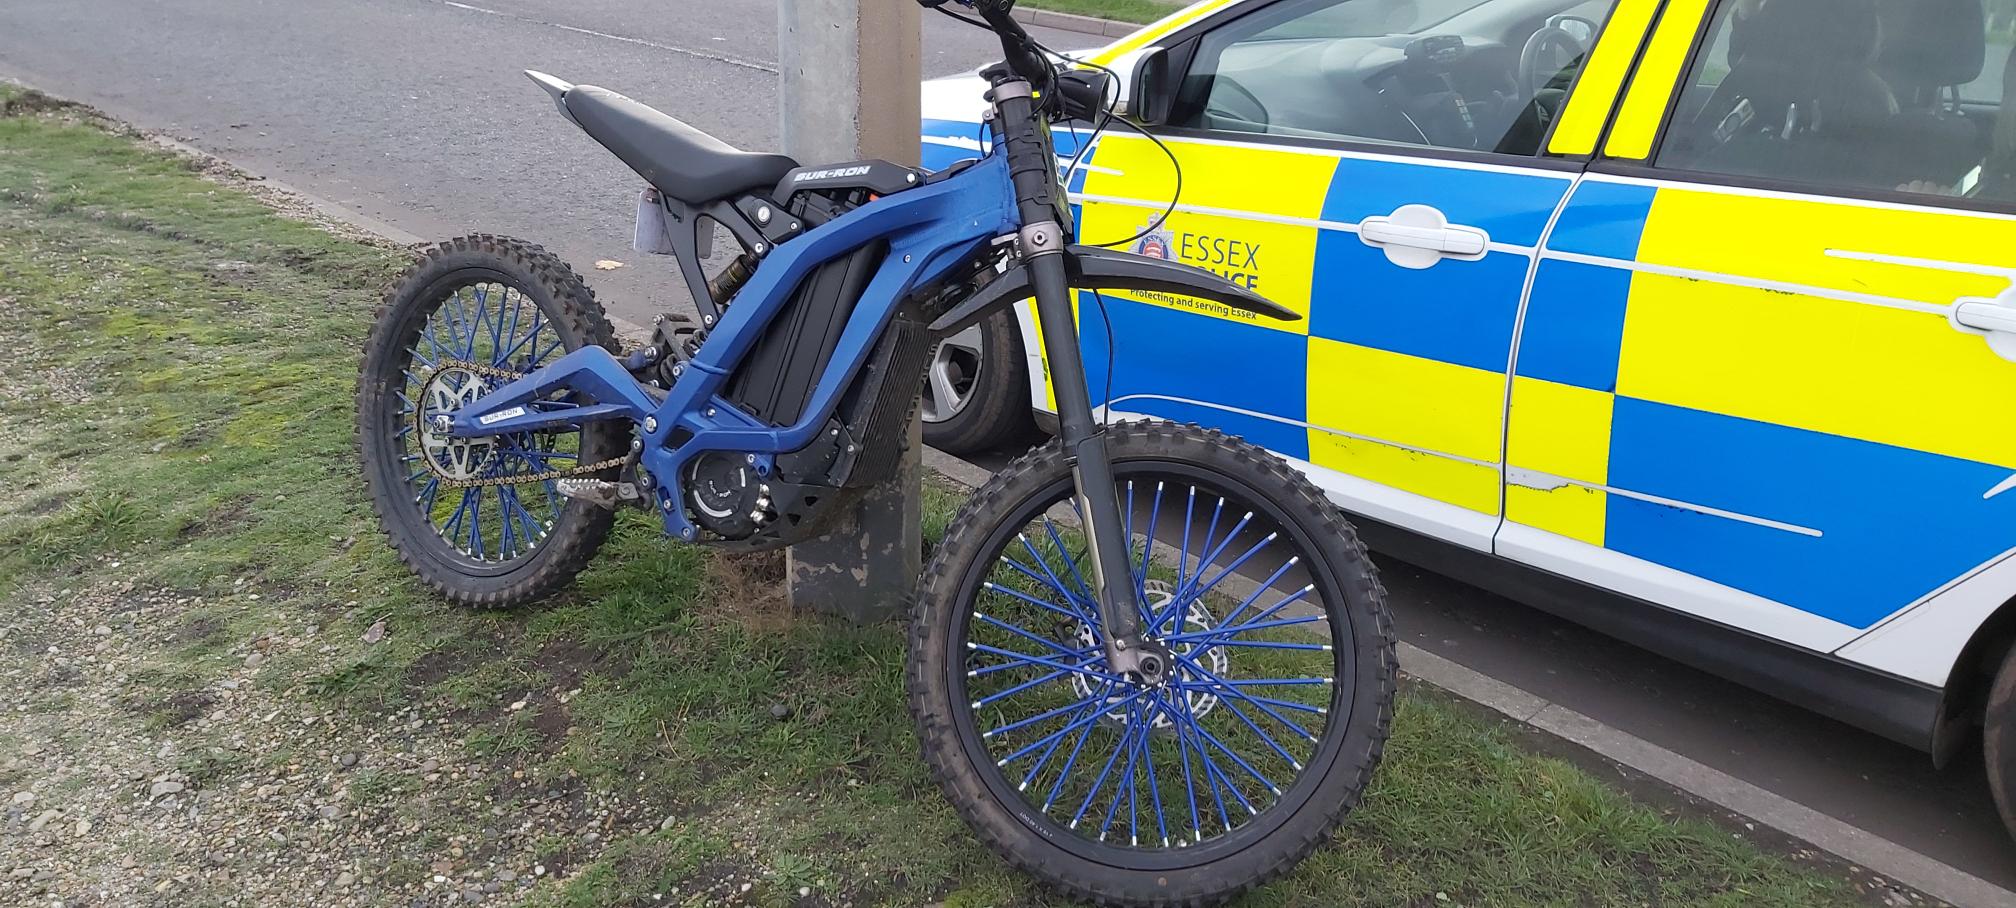 Parkeston and Harwich dirt bike rider has two-wheeler seized